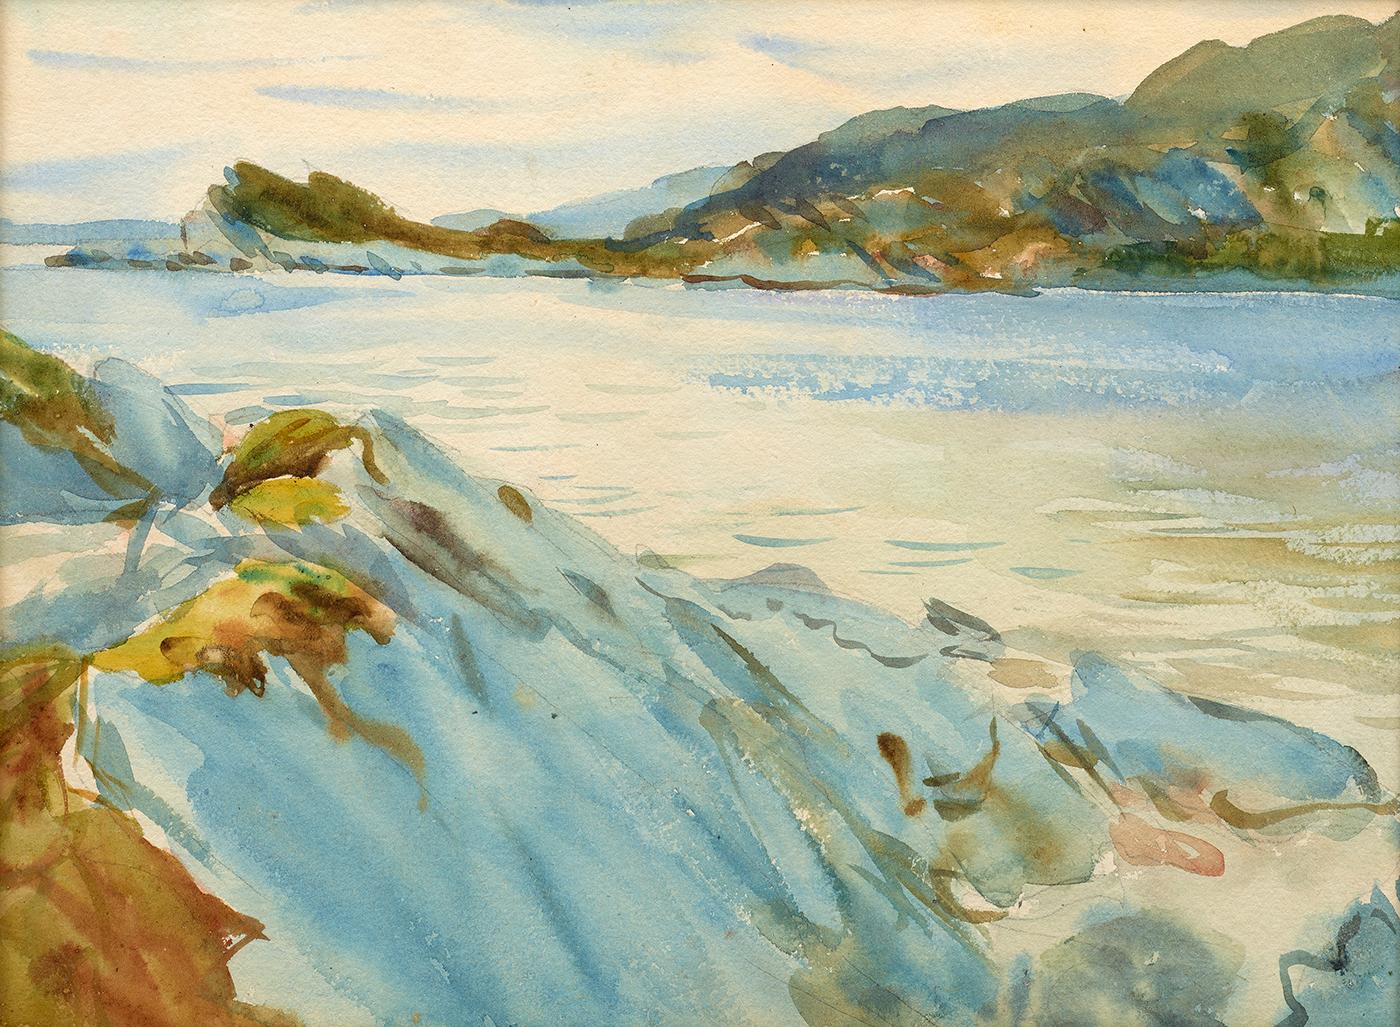 Landscape Painting John Singer Sargent - Loch Moidart, Inverness-shire (3), 1896